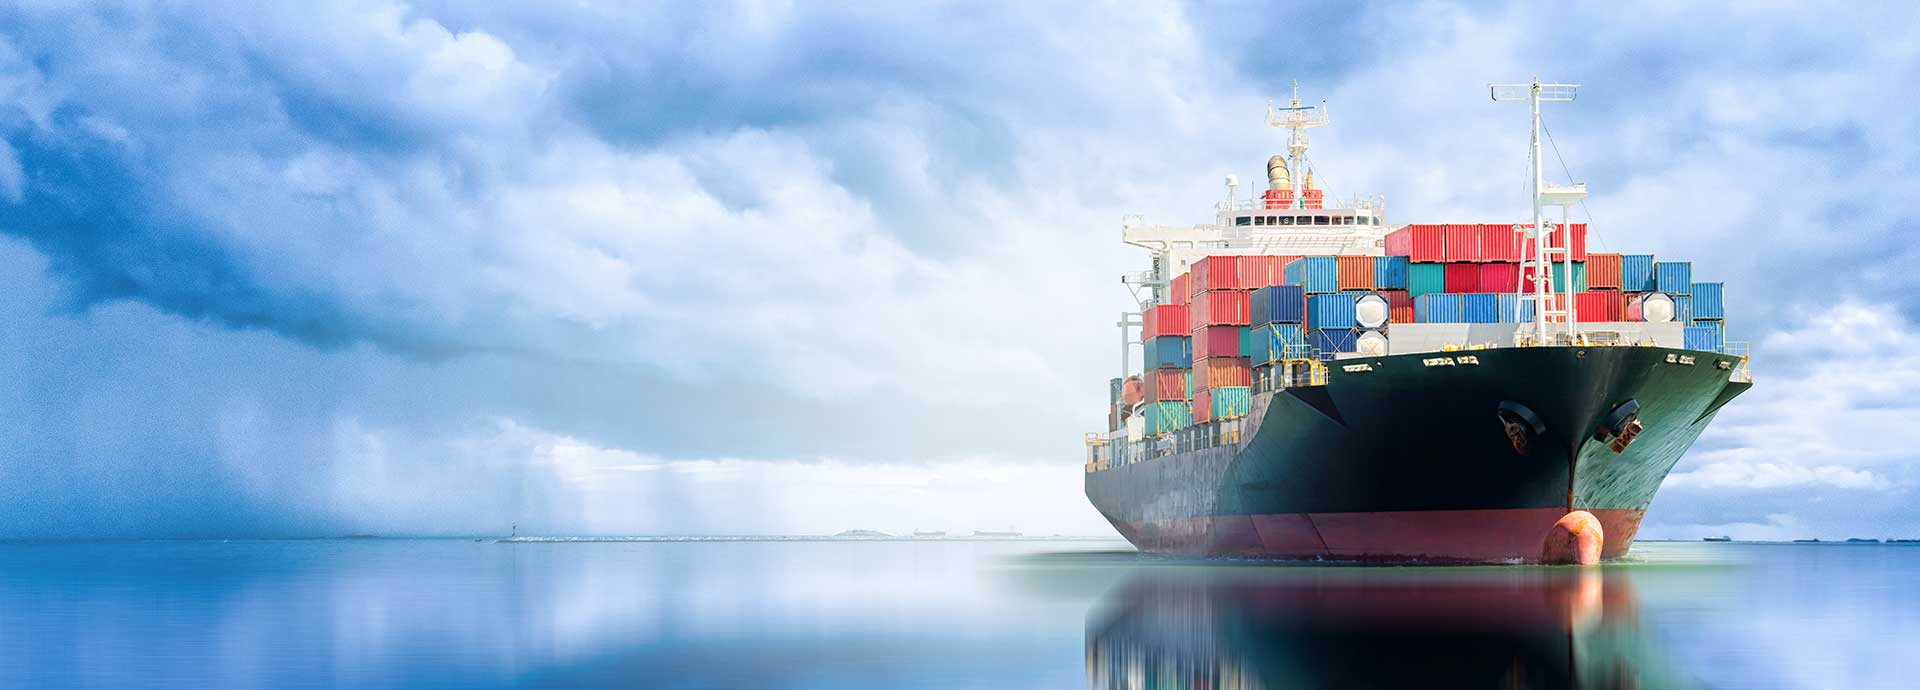 Silent Revolution at Sea: IMO Sulphur Cap 2020 regulations set to change maritime shipping